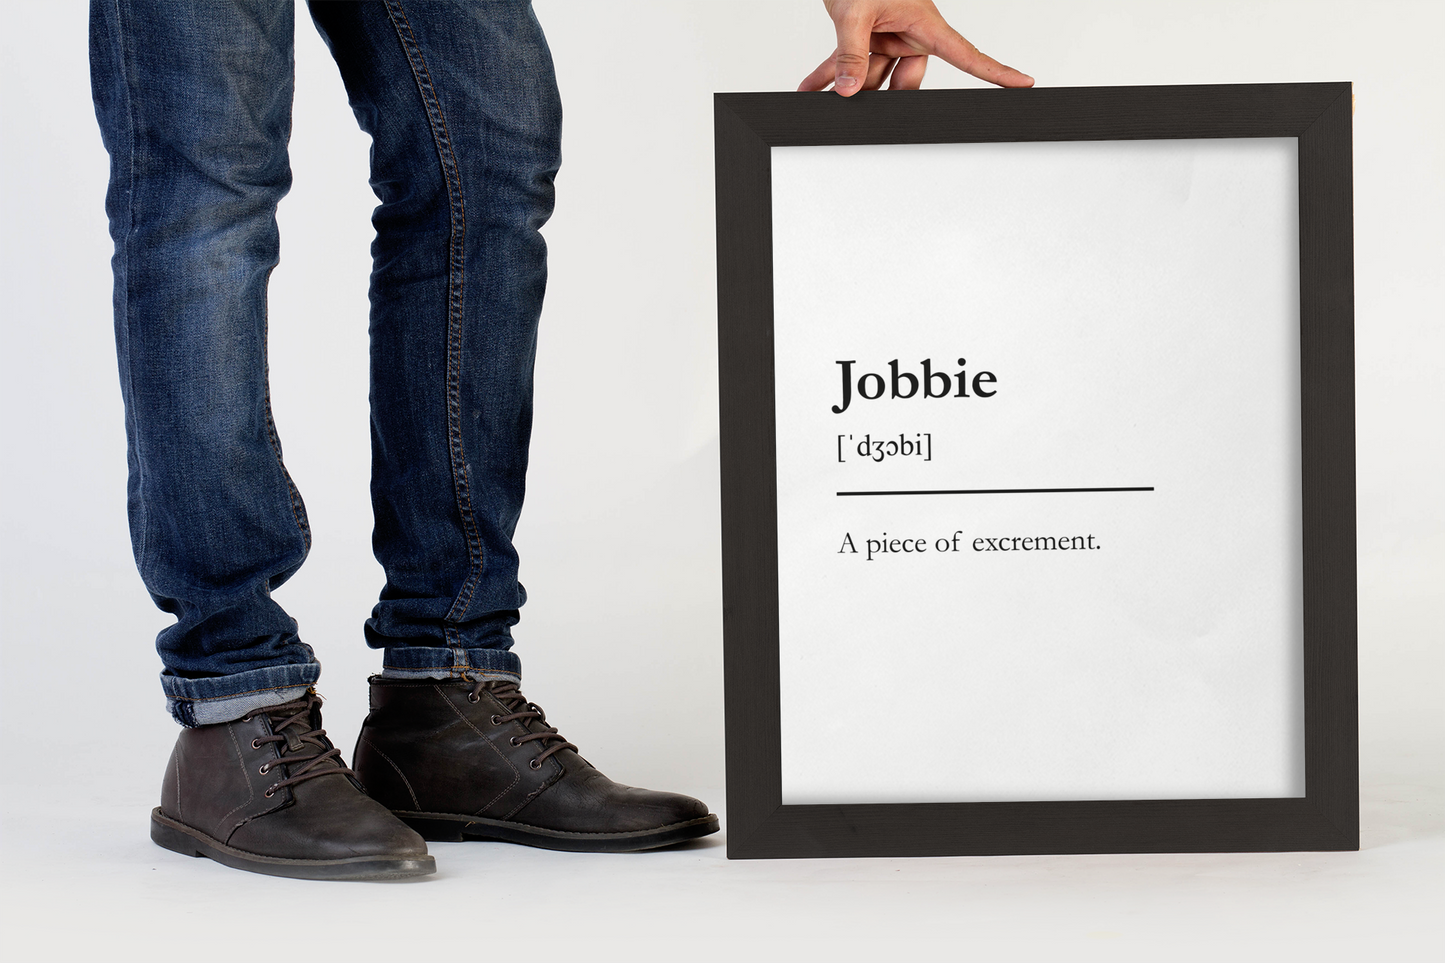 "Jobbie" - Scottish Slang